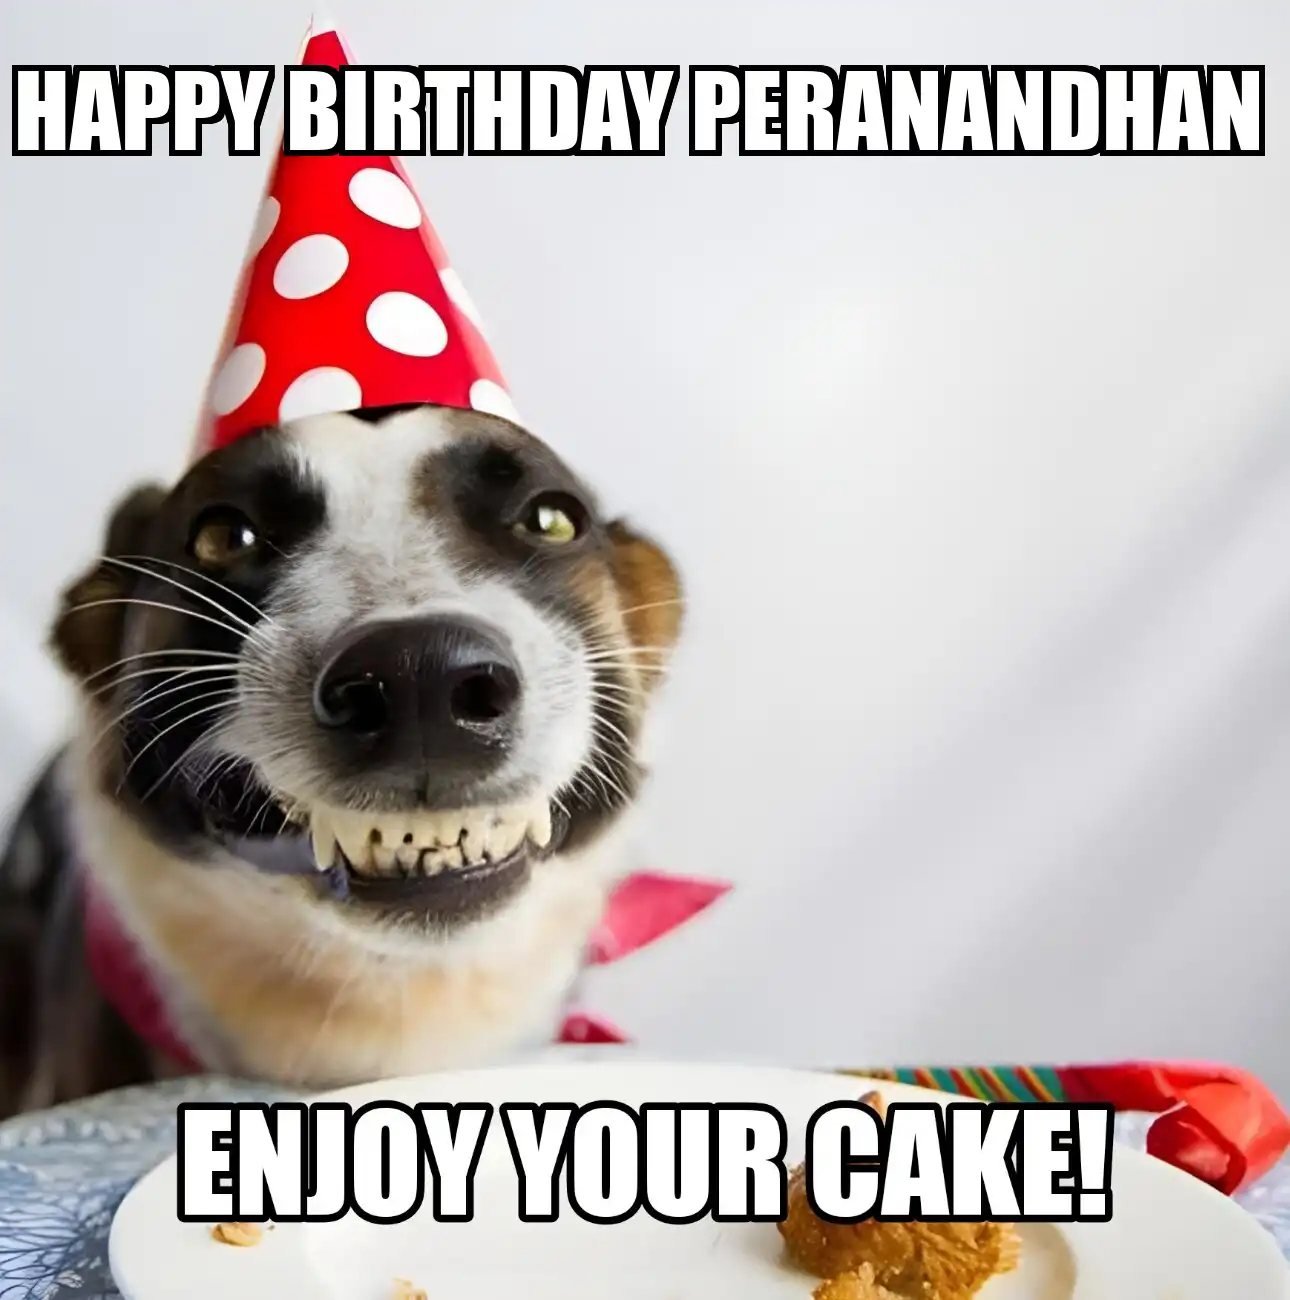 Happy Birthday Peranandhan Enjoy Your Cake Dog Meme